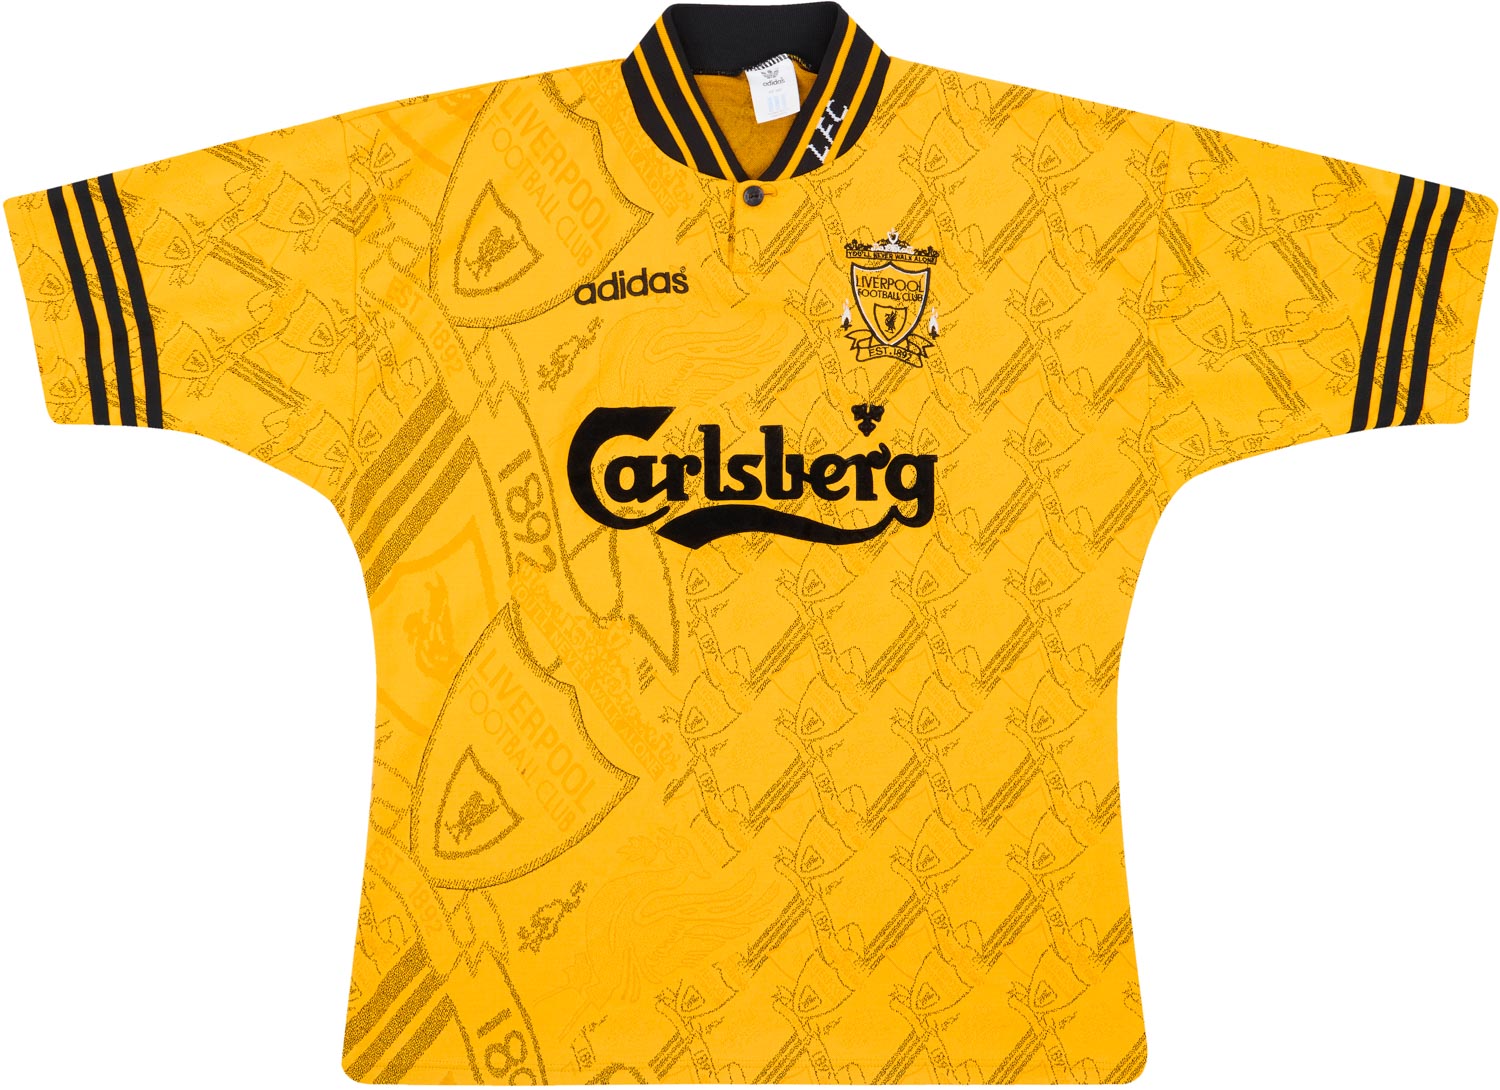 1994-96 Liverpool Third Shirt